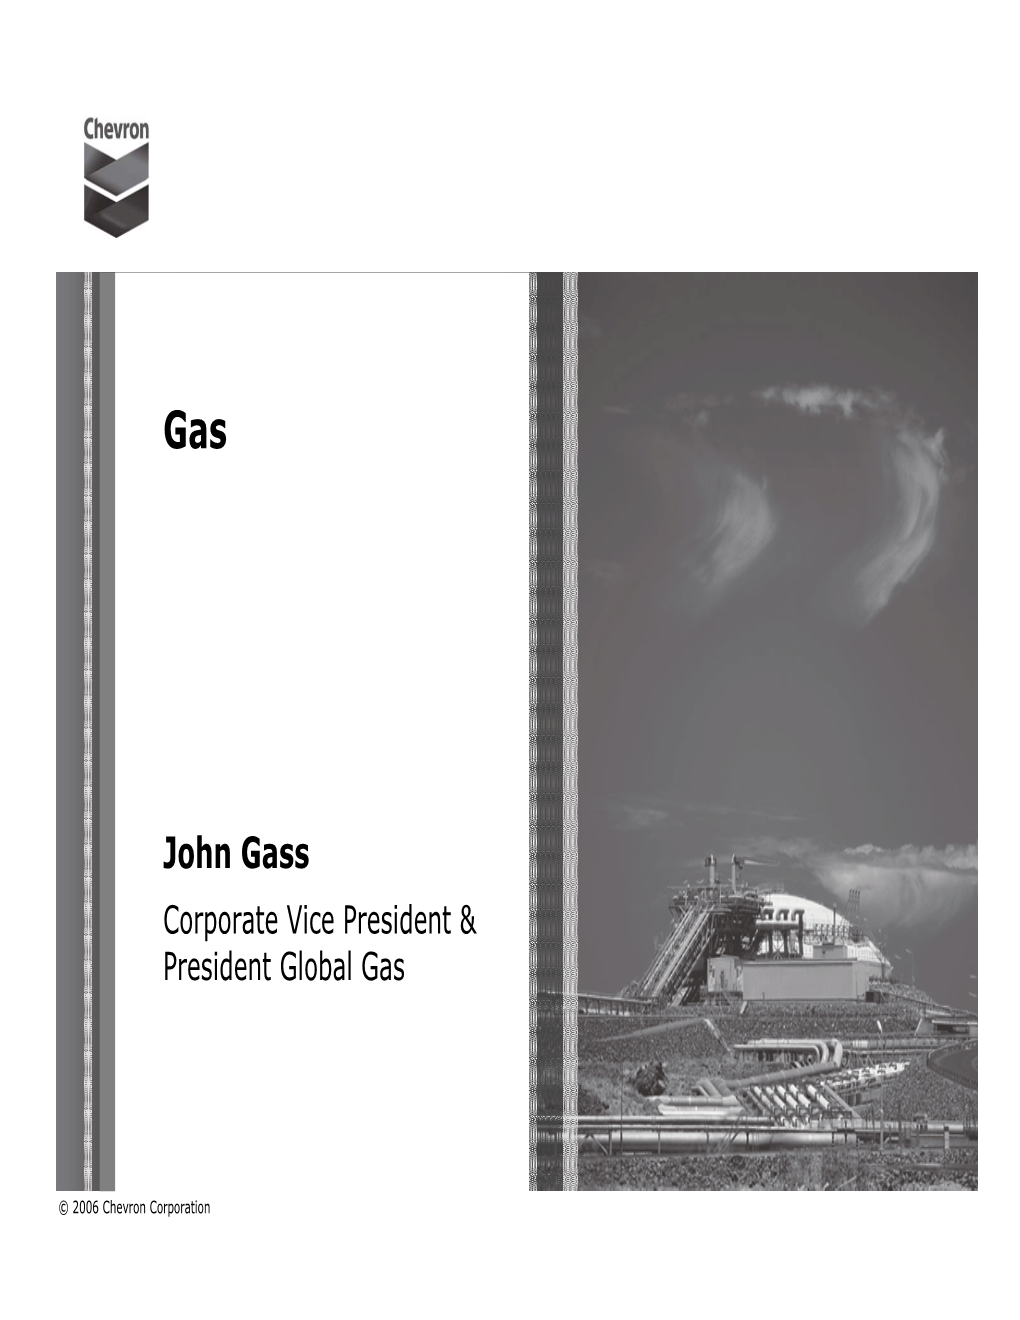 John Gass Corporate Vice President & President Global Gas